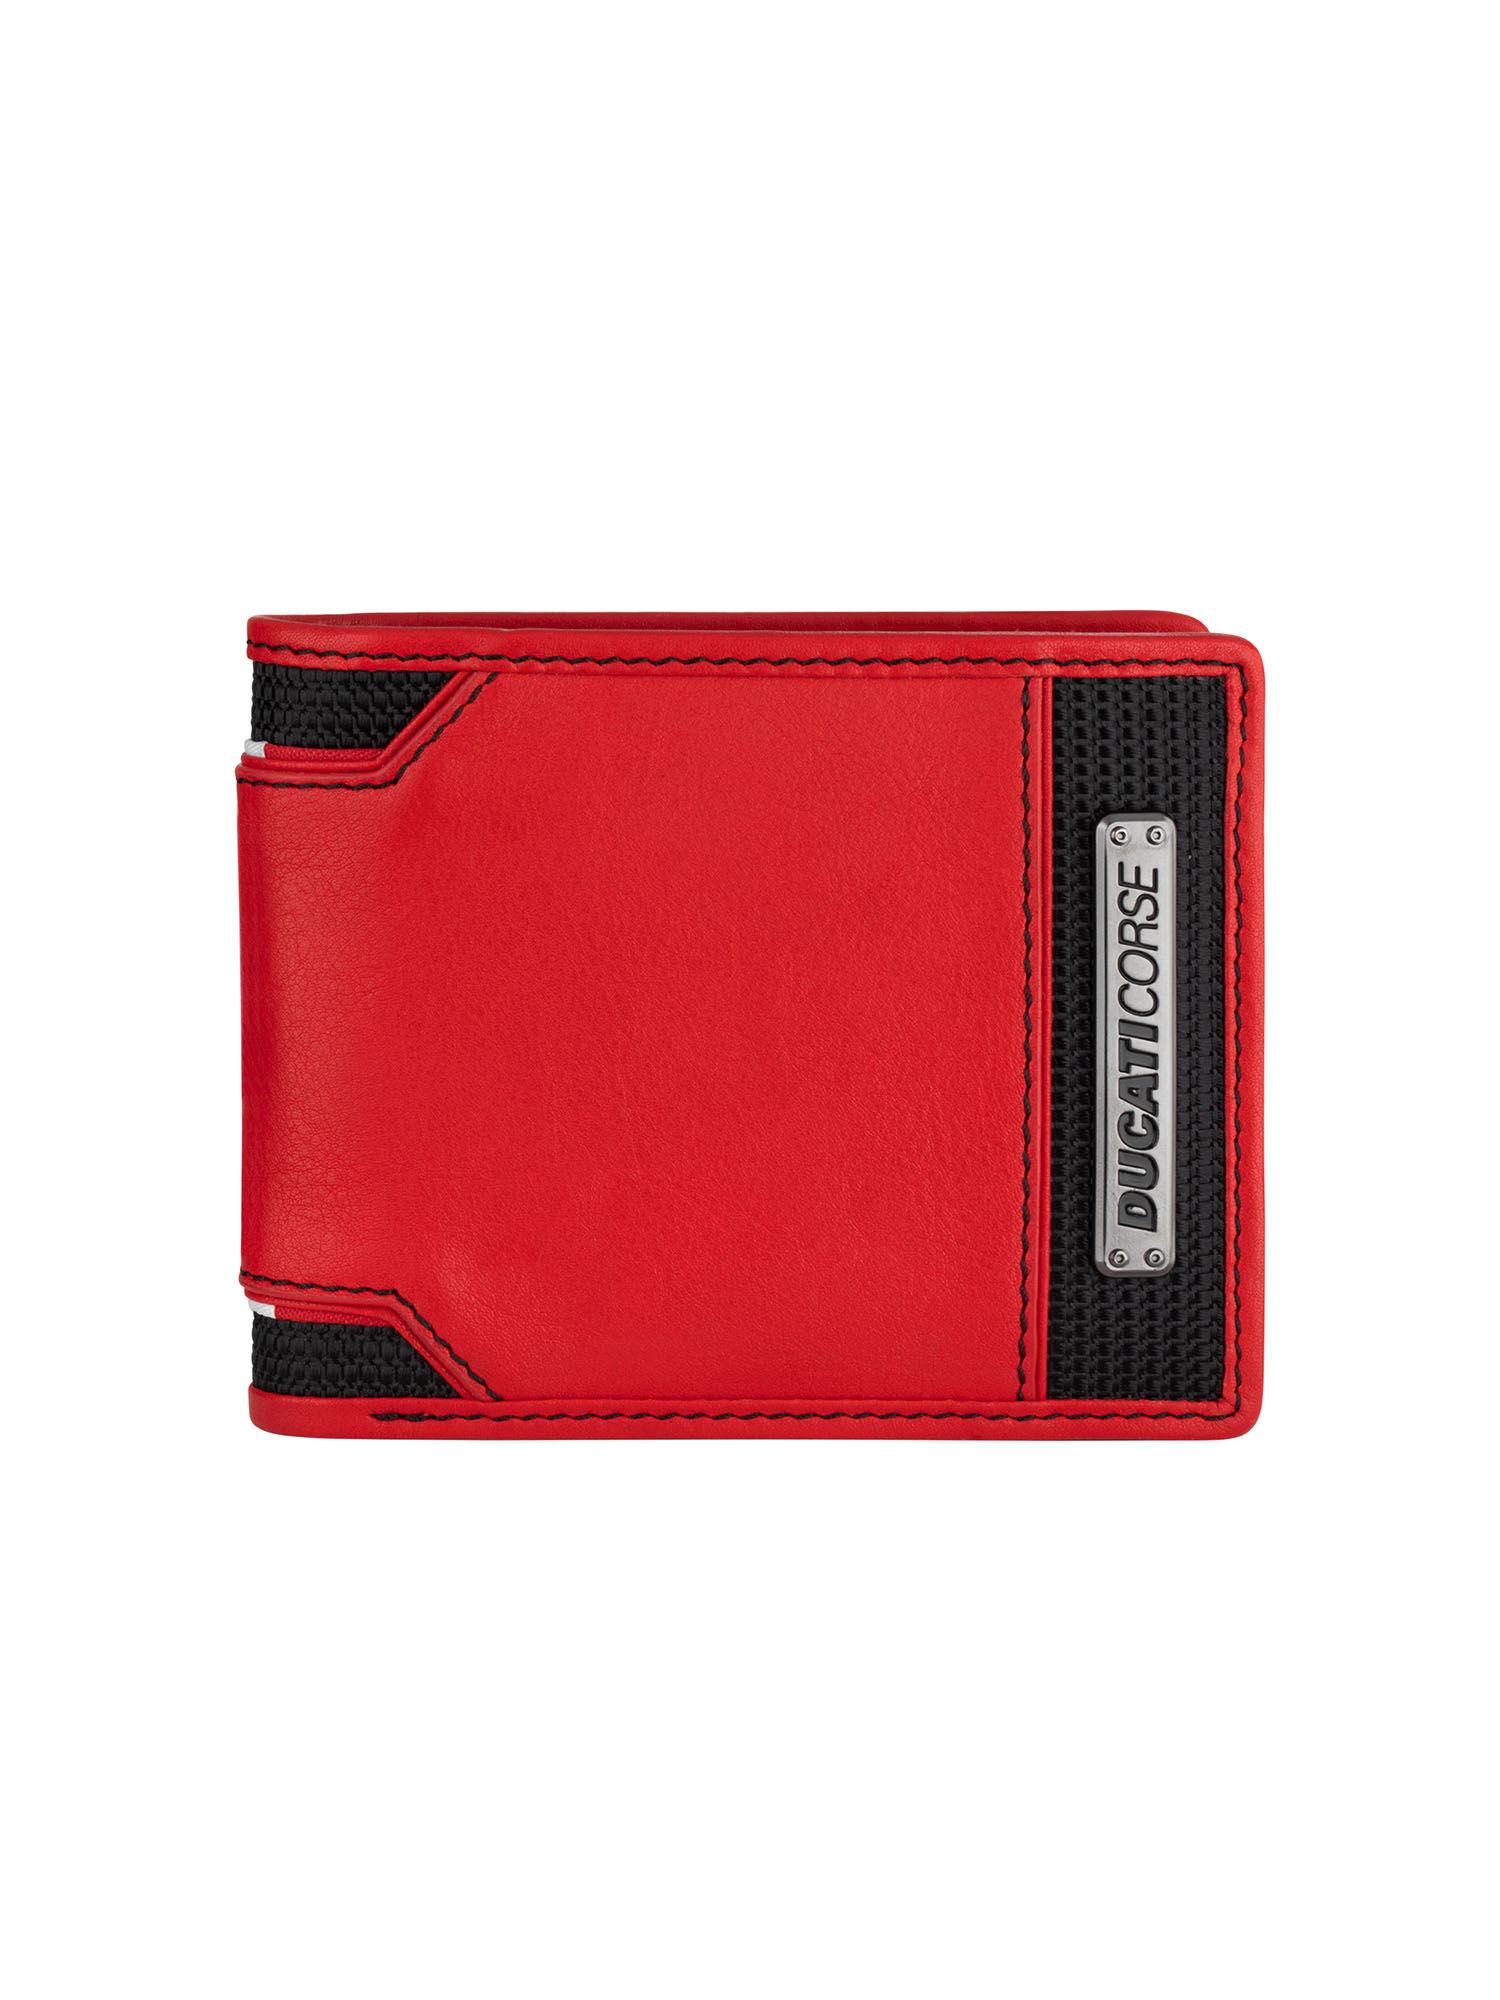 dtlgw2000303 elegante genuine leather wallet